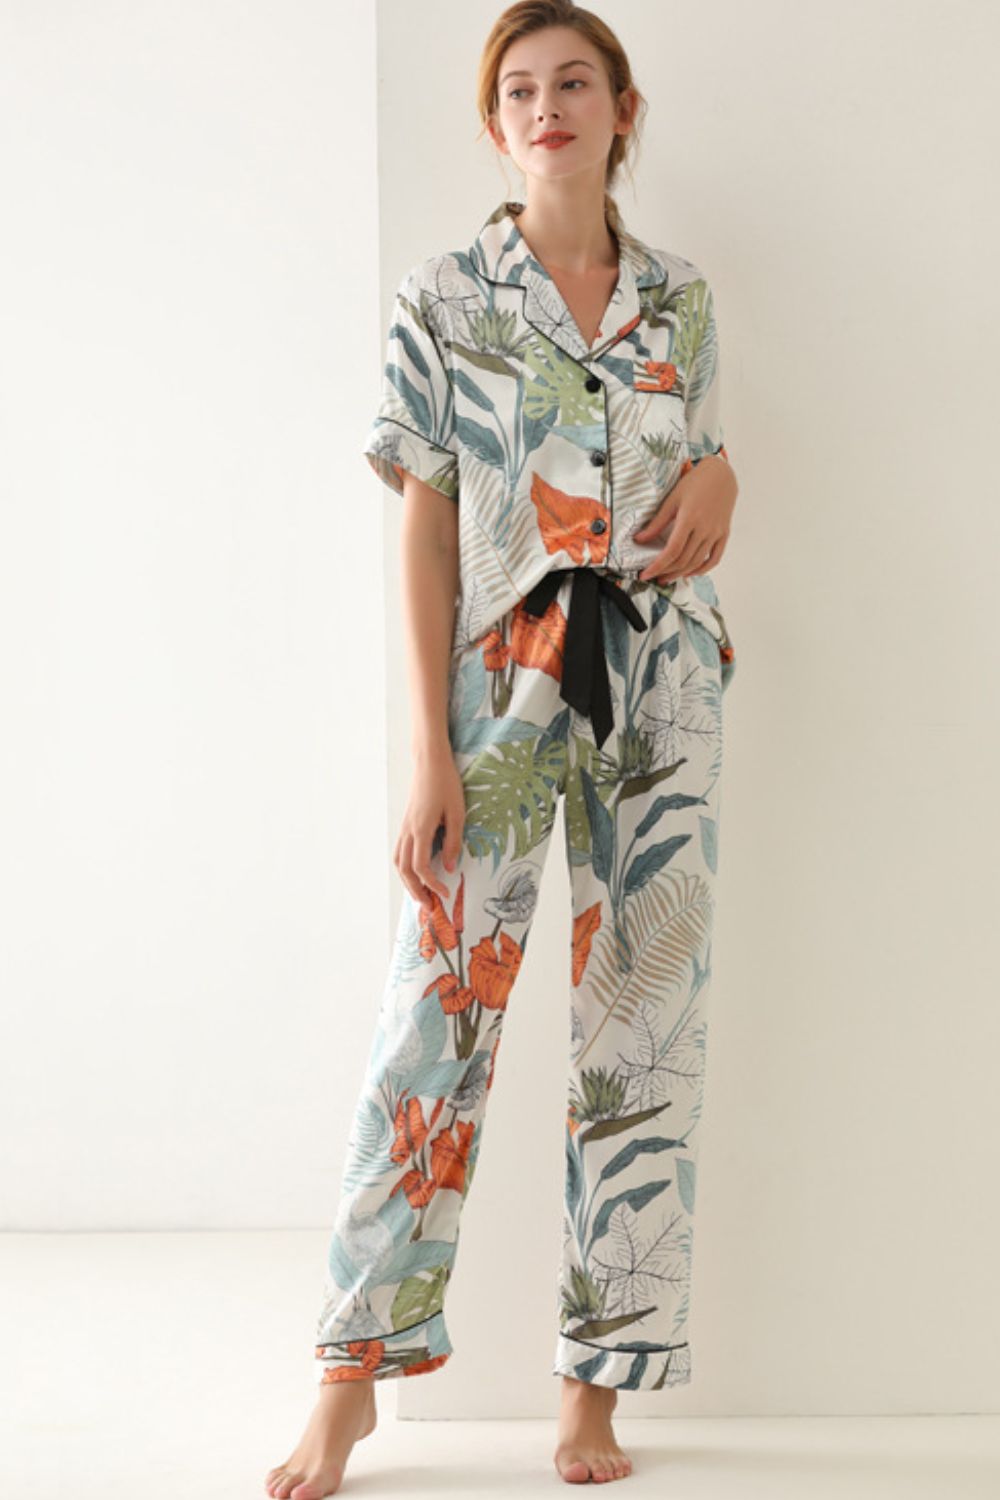 Botanical Print Button-Up Top and Pants Pajama Set DromedarShop.com Online Boutique